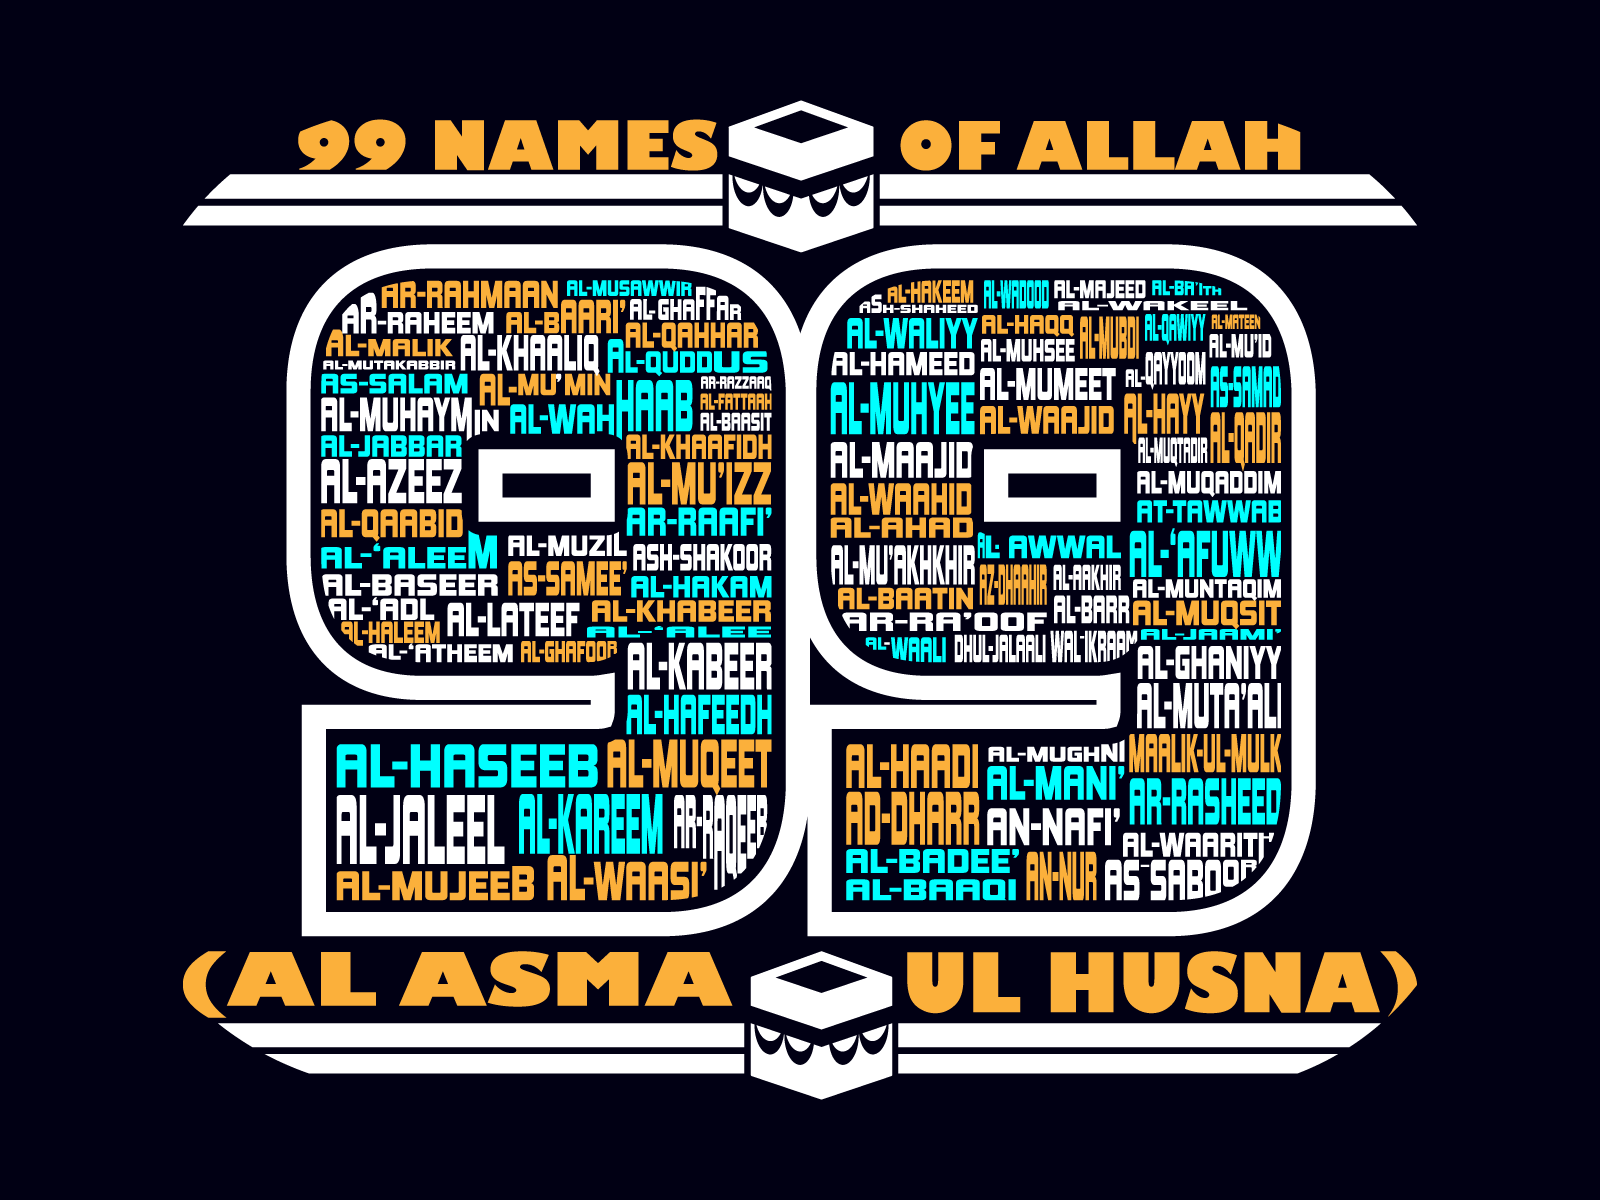 99 Names of Allah Al Asma Ul Husna in english by Shahariar Noman Sifat on  Dribbble